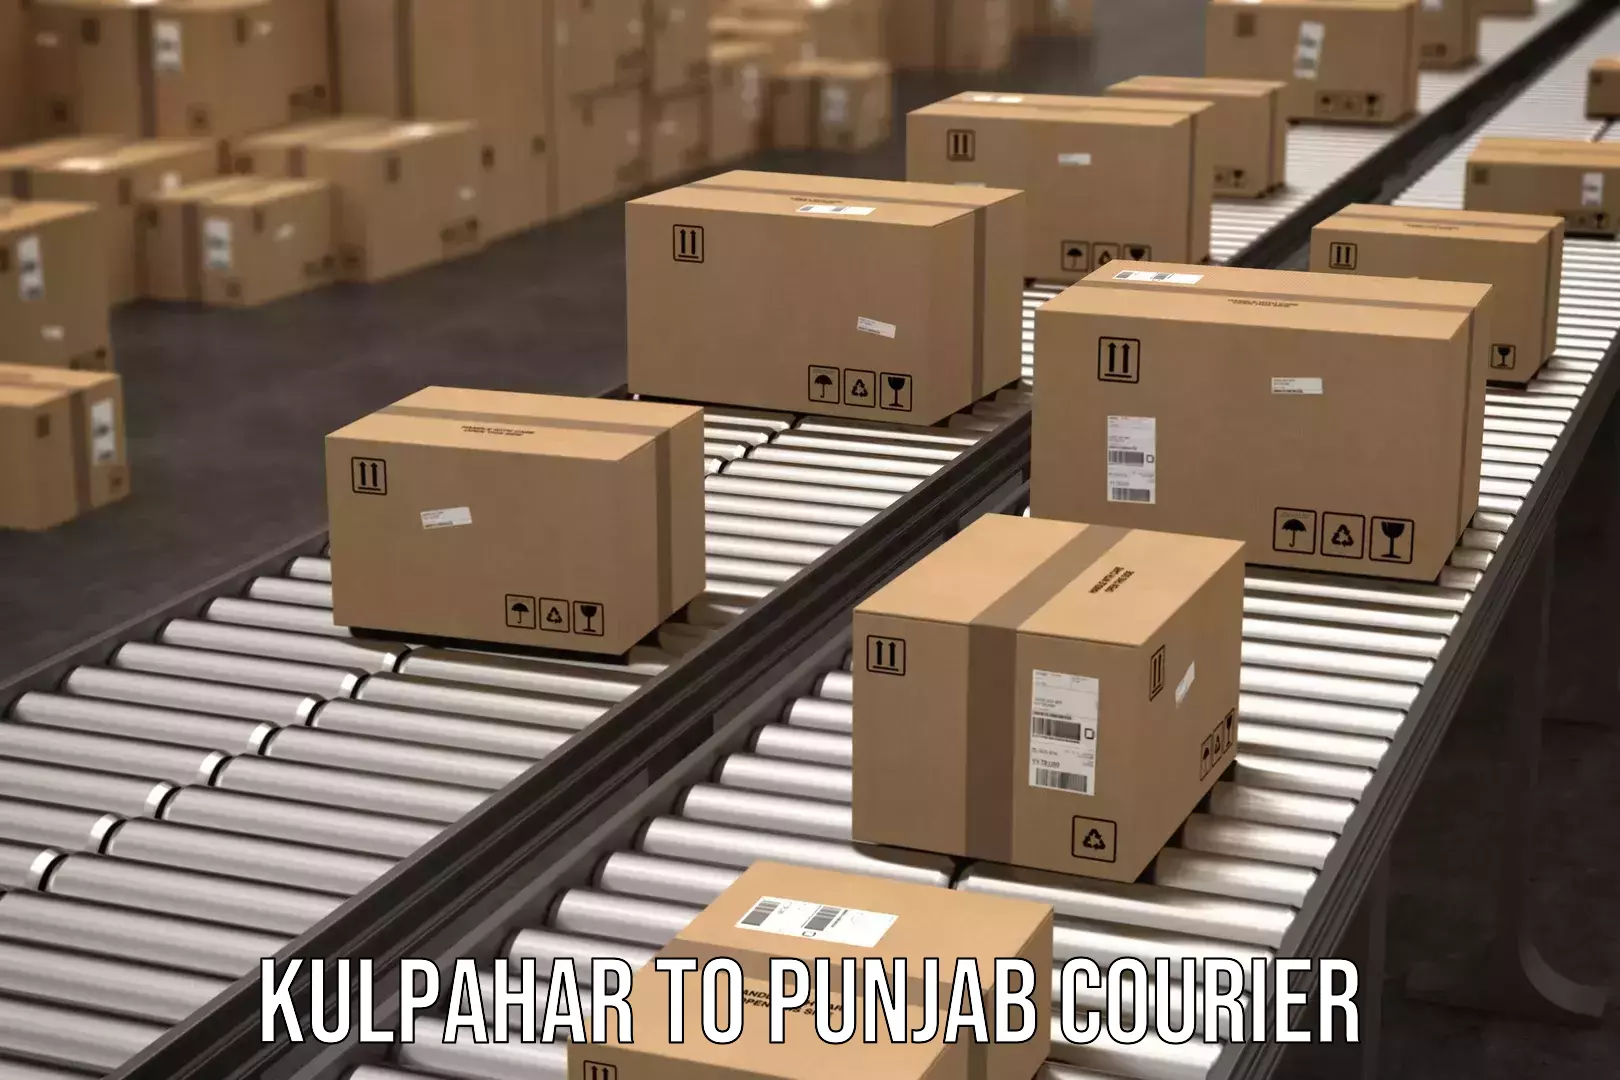 Express delivery capabilities Kulpahar to Ajnala